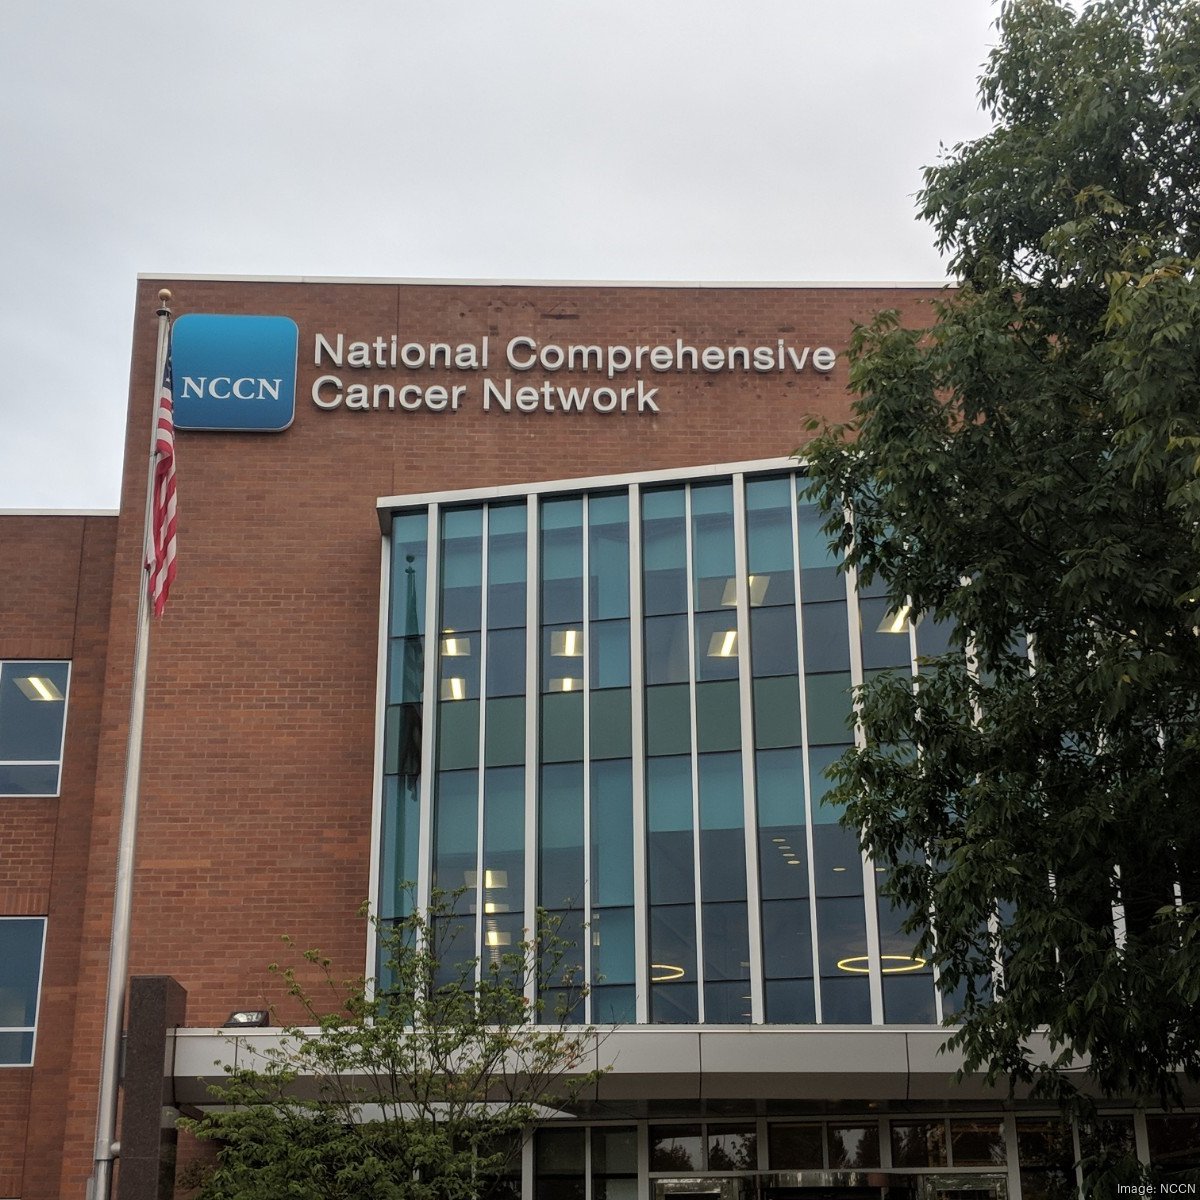 National Comprehensive Cancer Network - Home